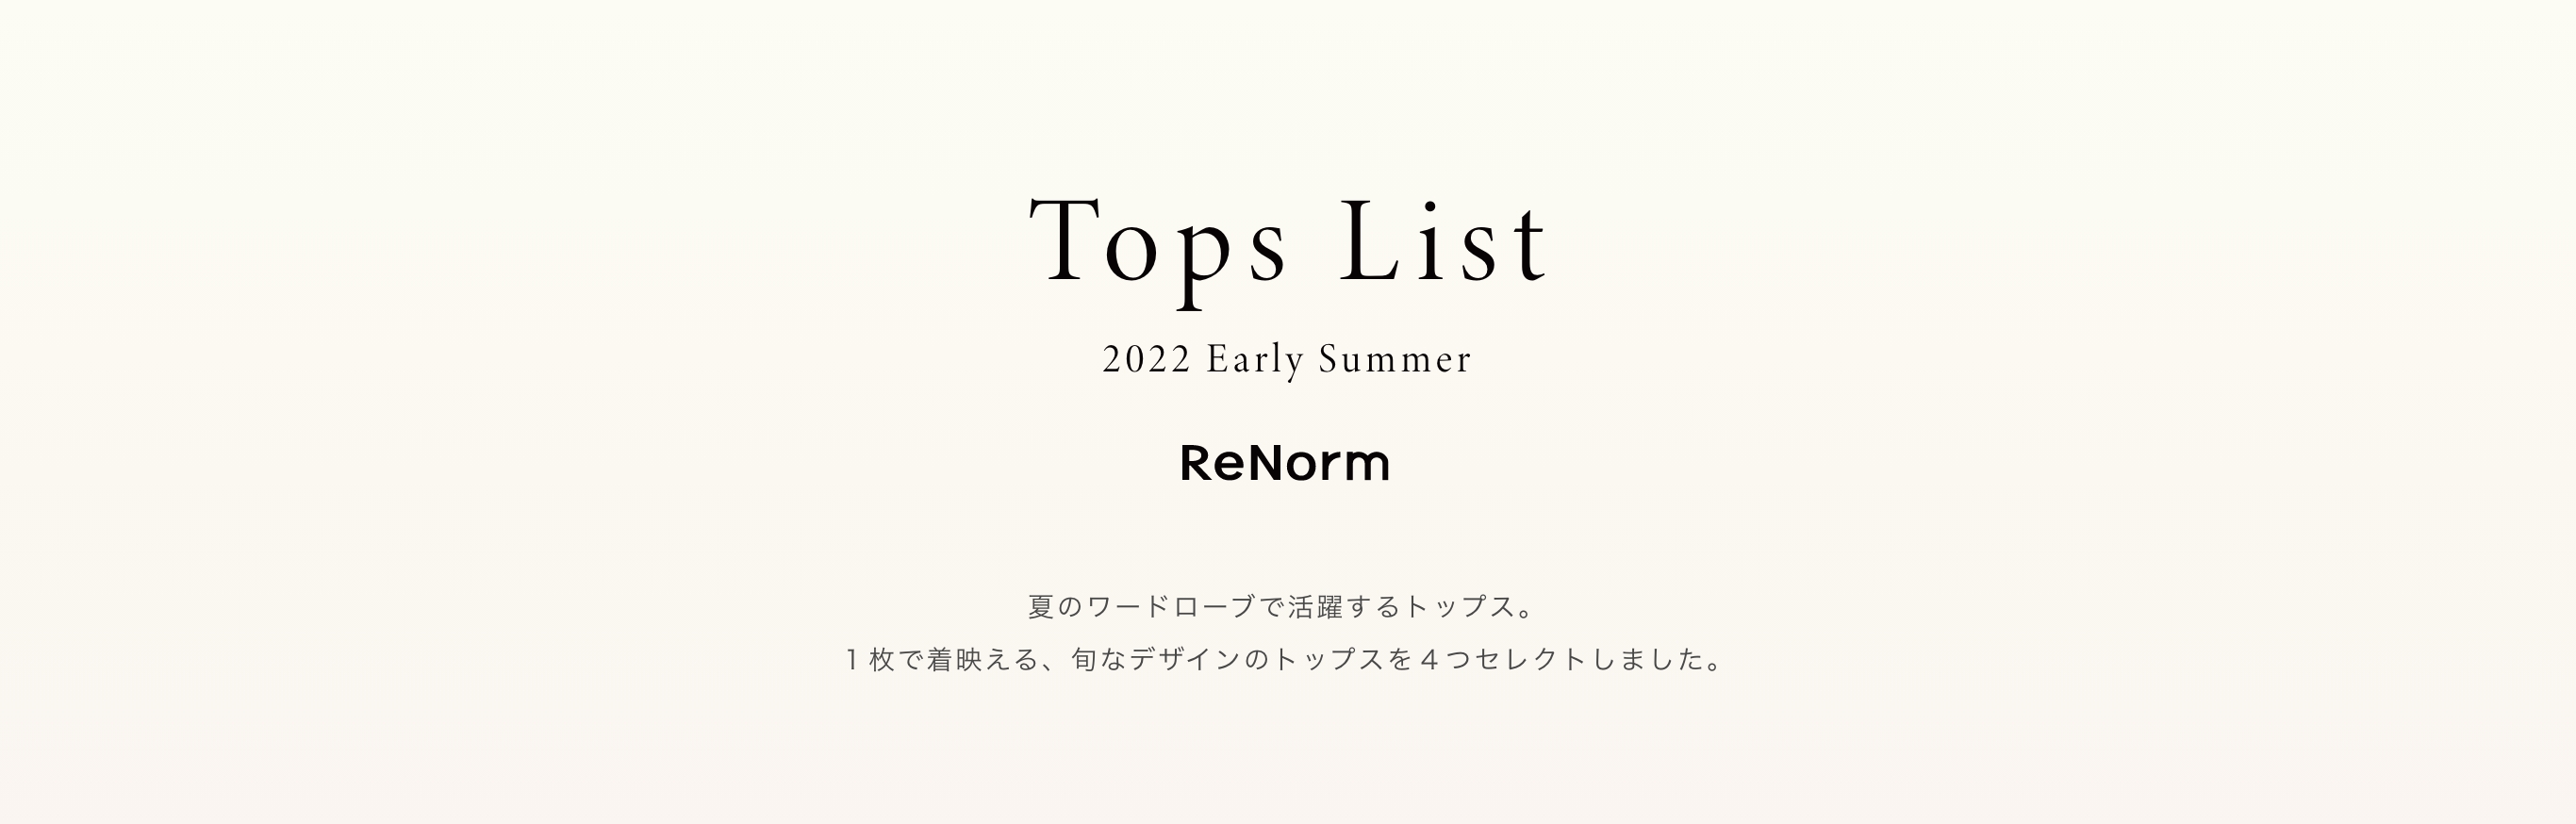 ReNorm Tops List　2022 Early Summer ReNorm